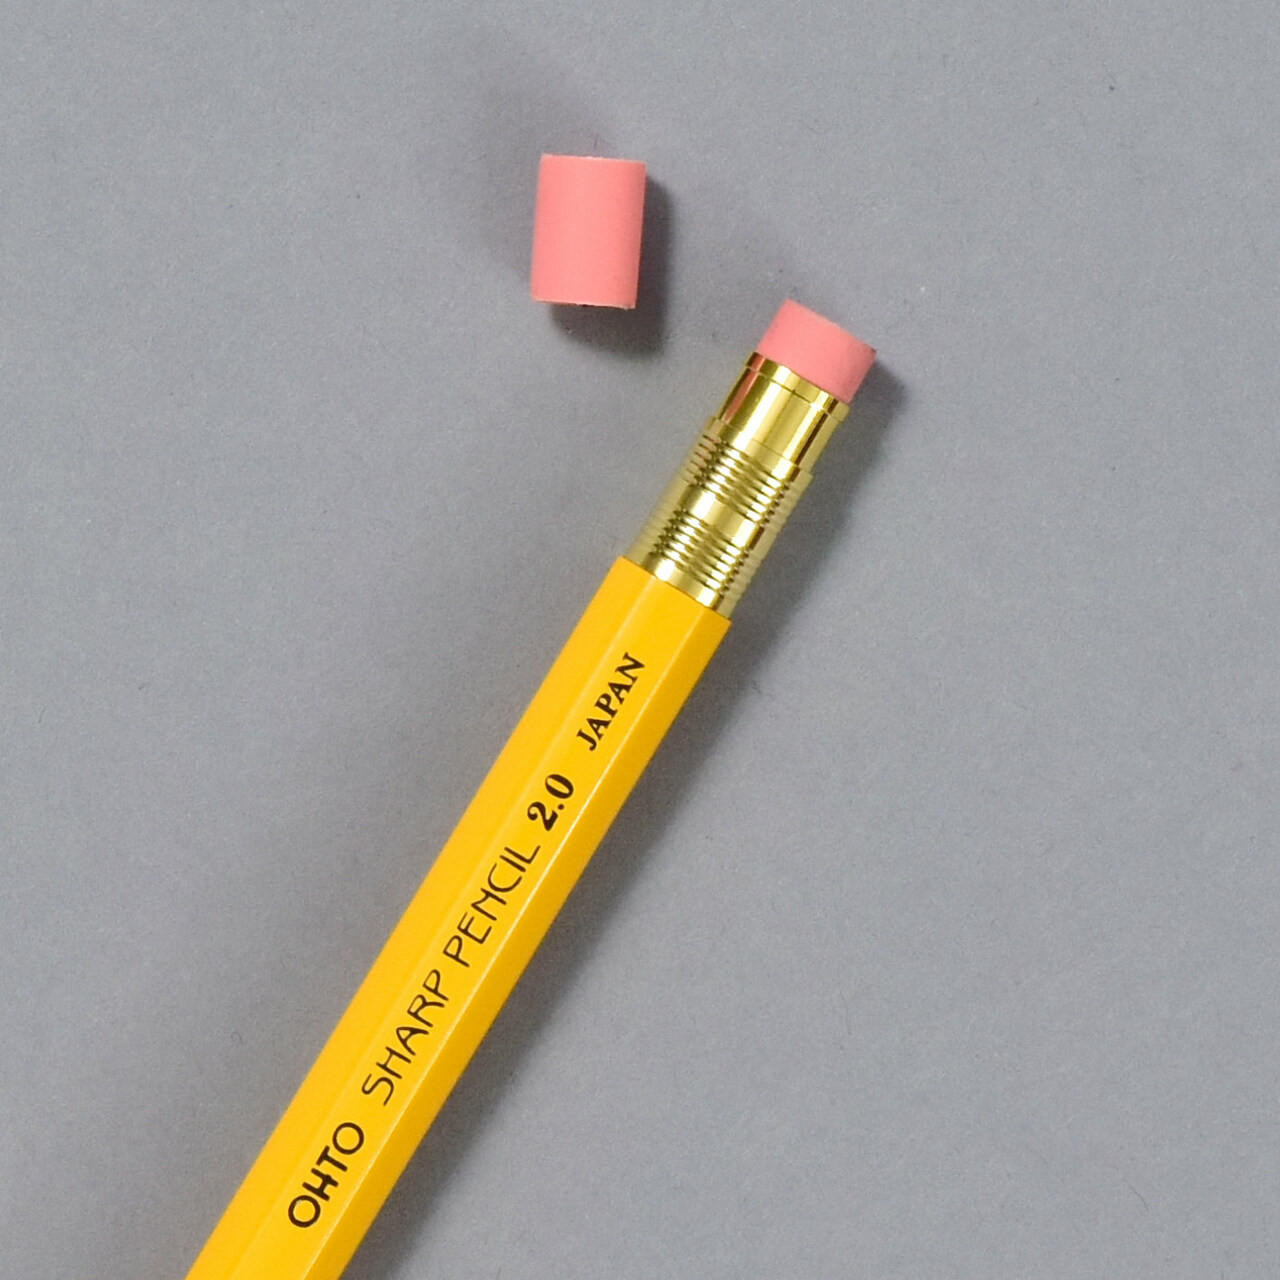 Seed Eraser for Color Pencils